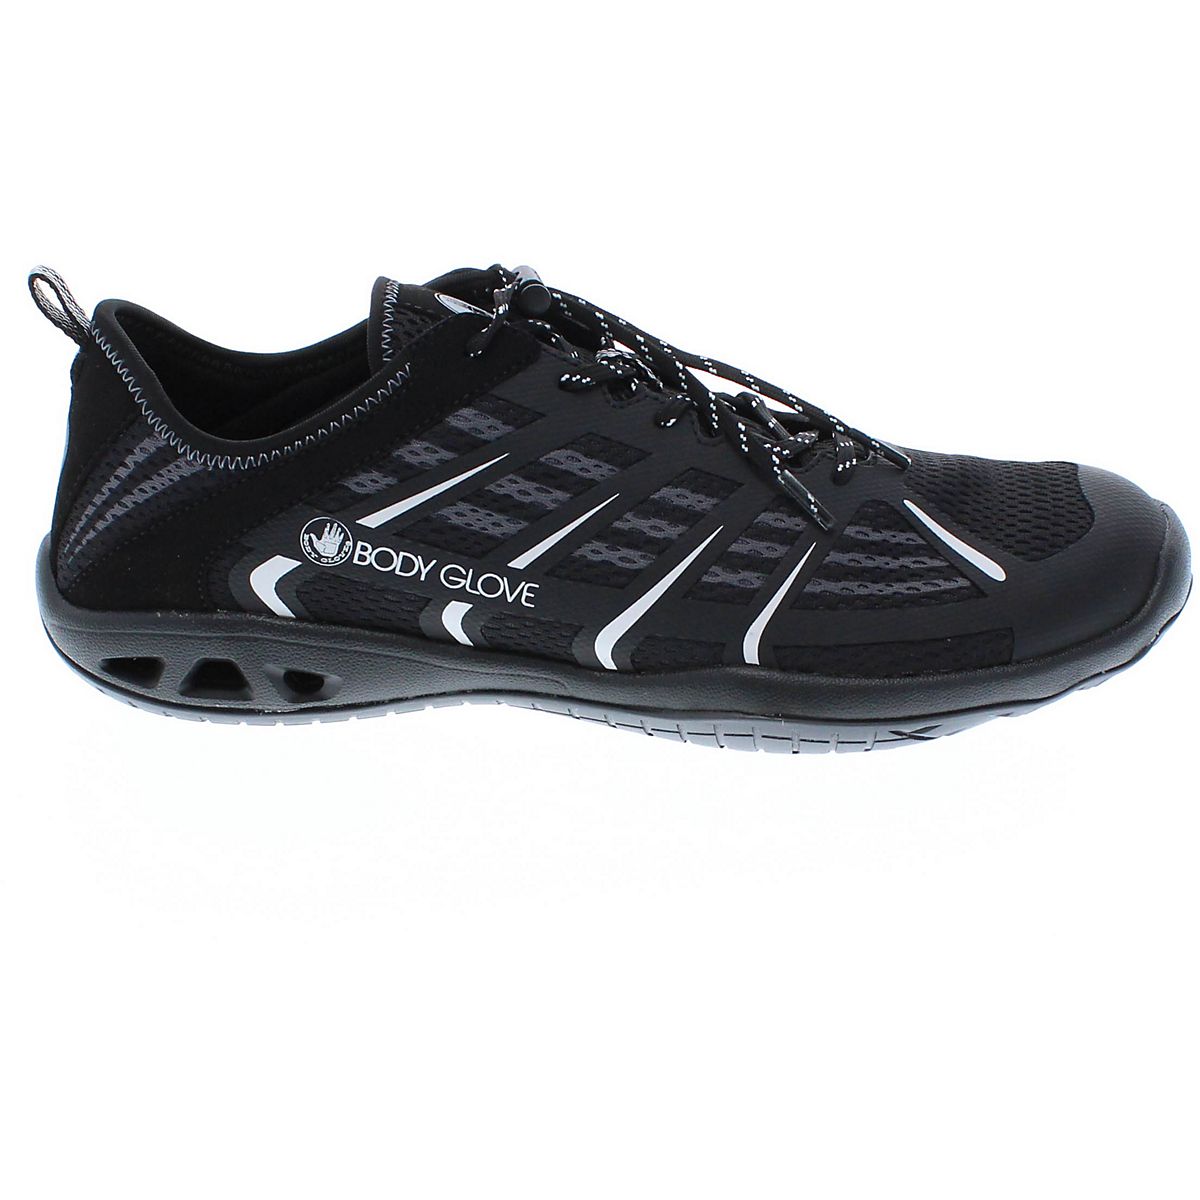 Body Glove Original Dynamo Rapid Hybrid Water/Land Shoes Men's Size 9-9.5 *NEW* 